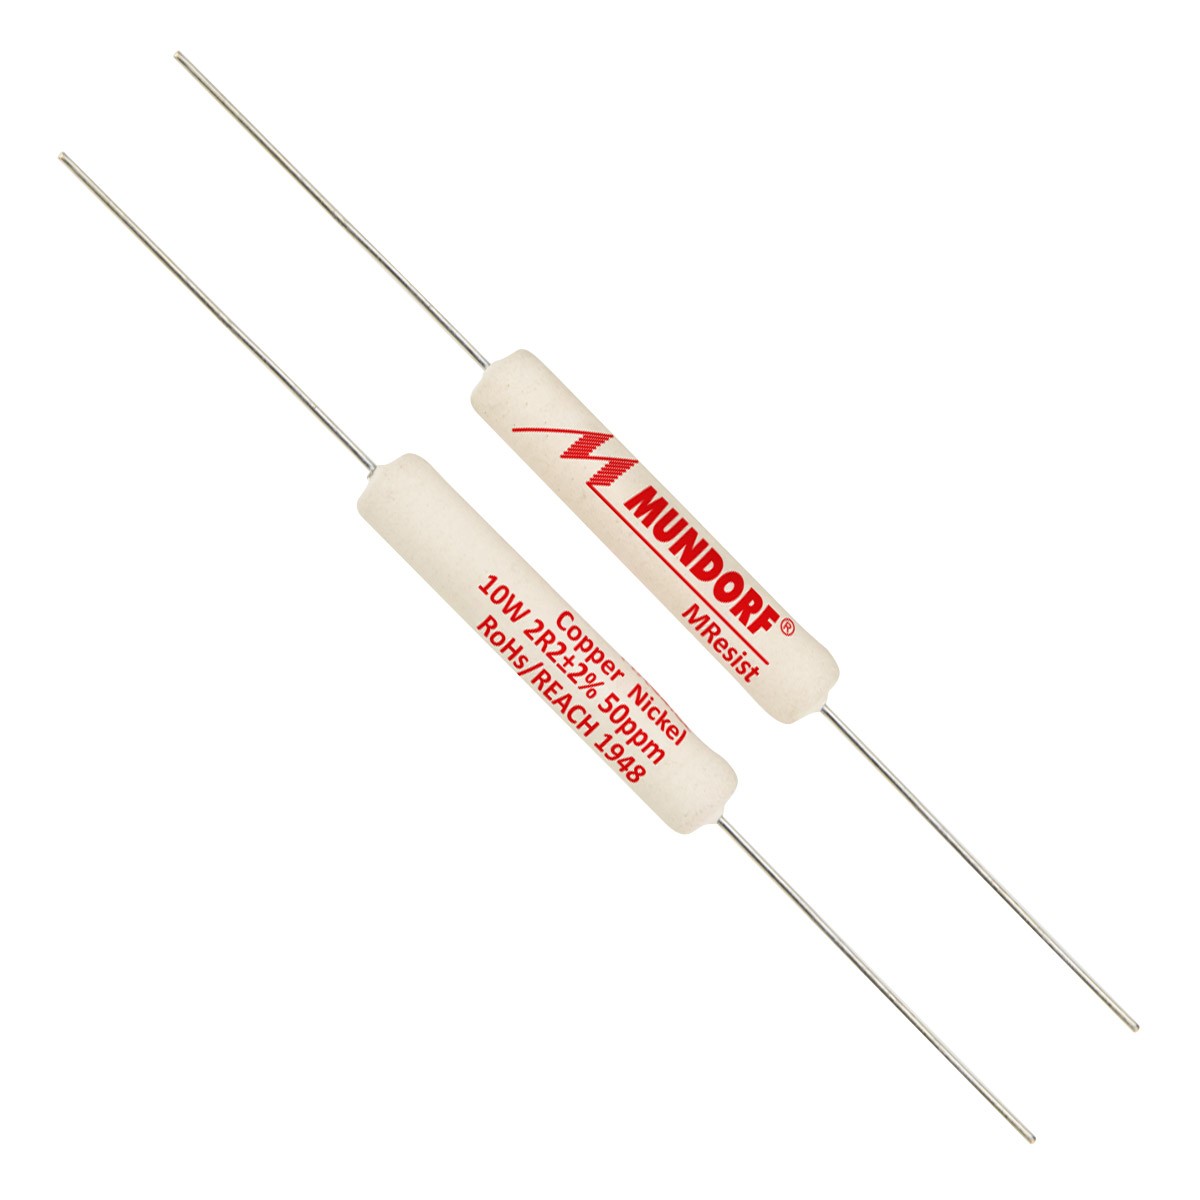 MUNDORF MRESIST CLASSIC Resistor 10W 15 Ohm